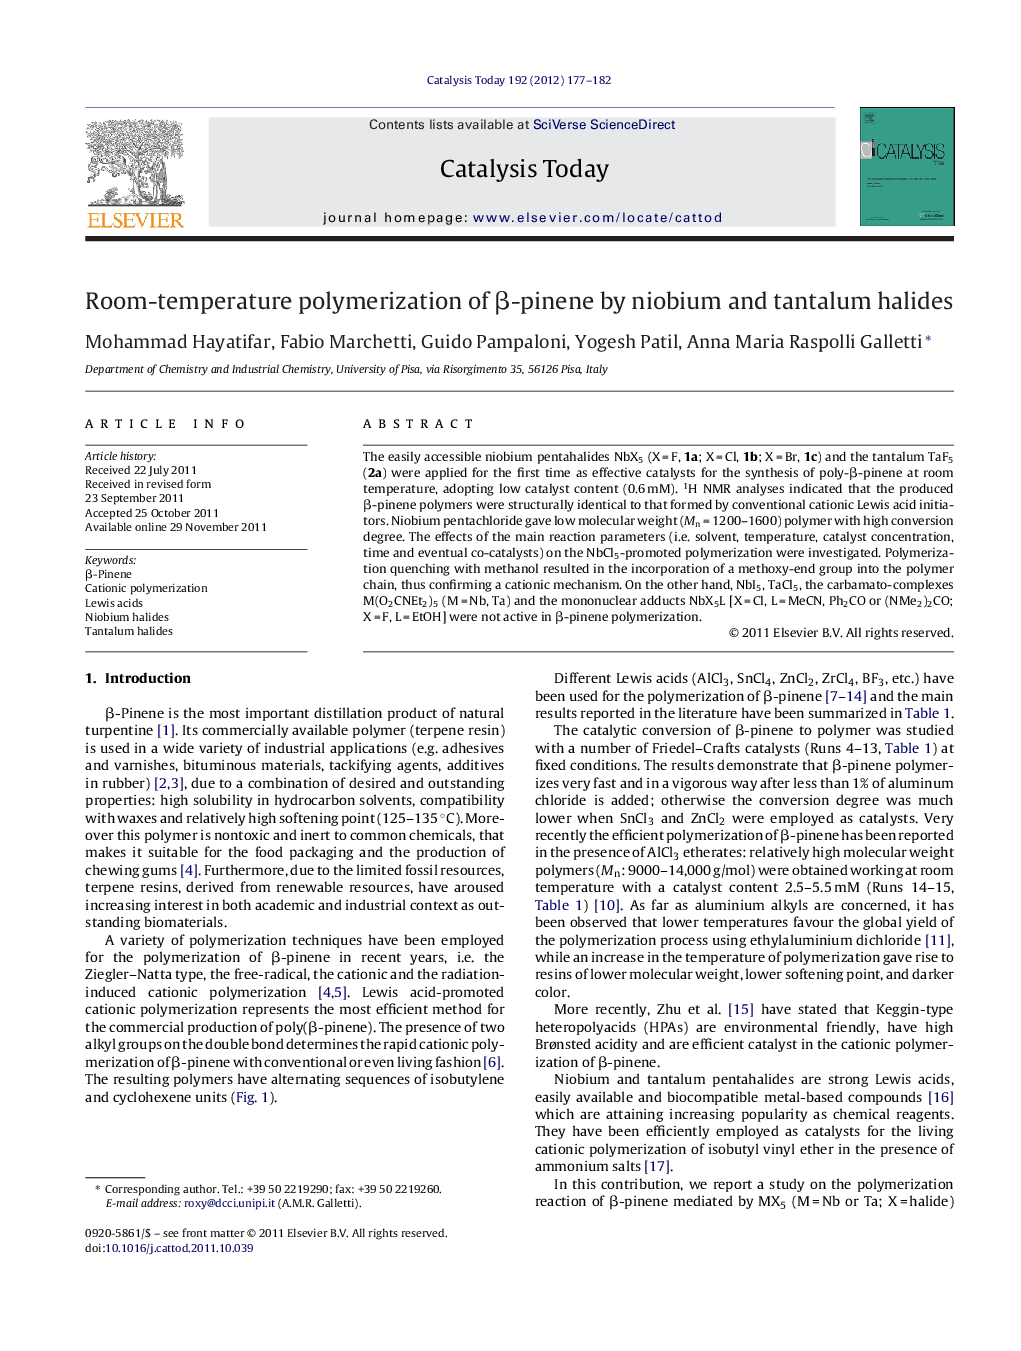 Room-temperature polymerization of β-pinene by niobium and tantalum halides